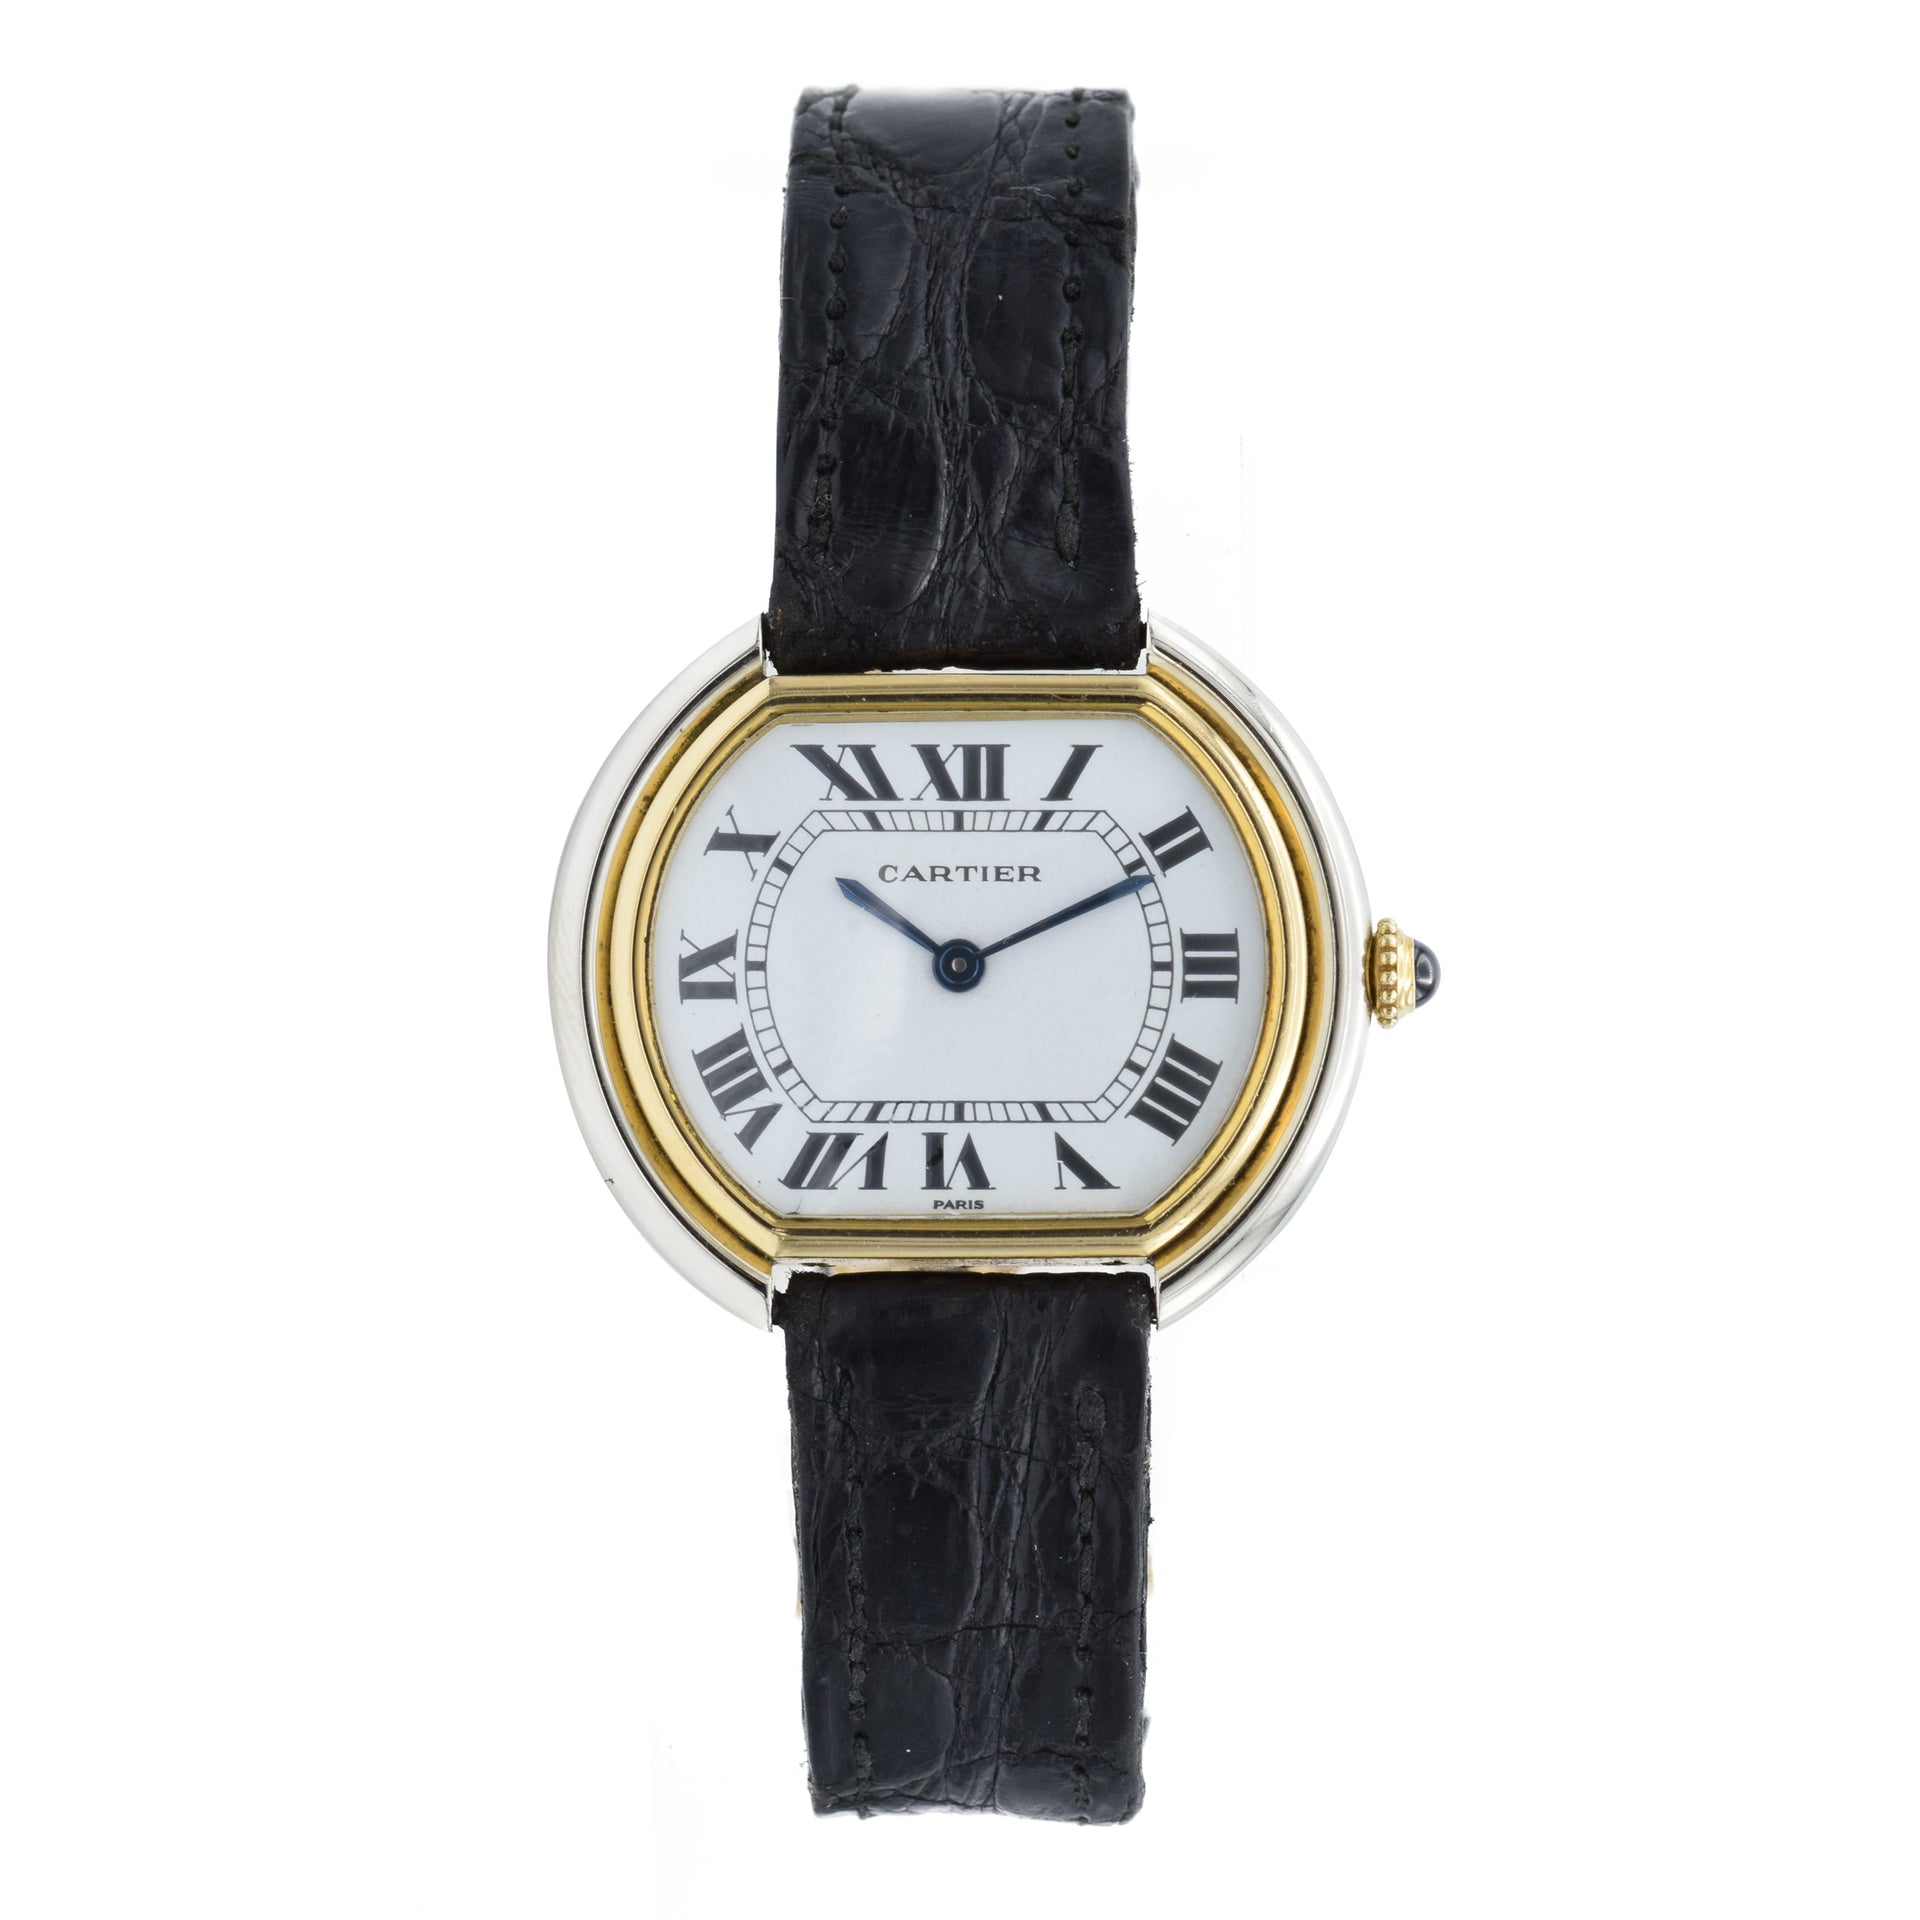 Vintage 1977 Cartier Watch